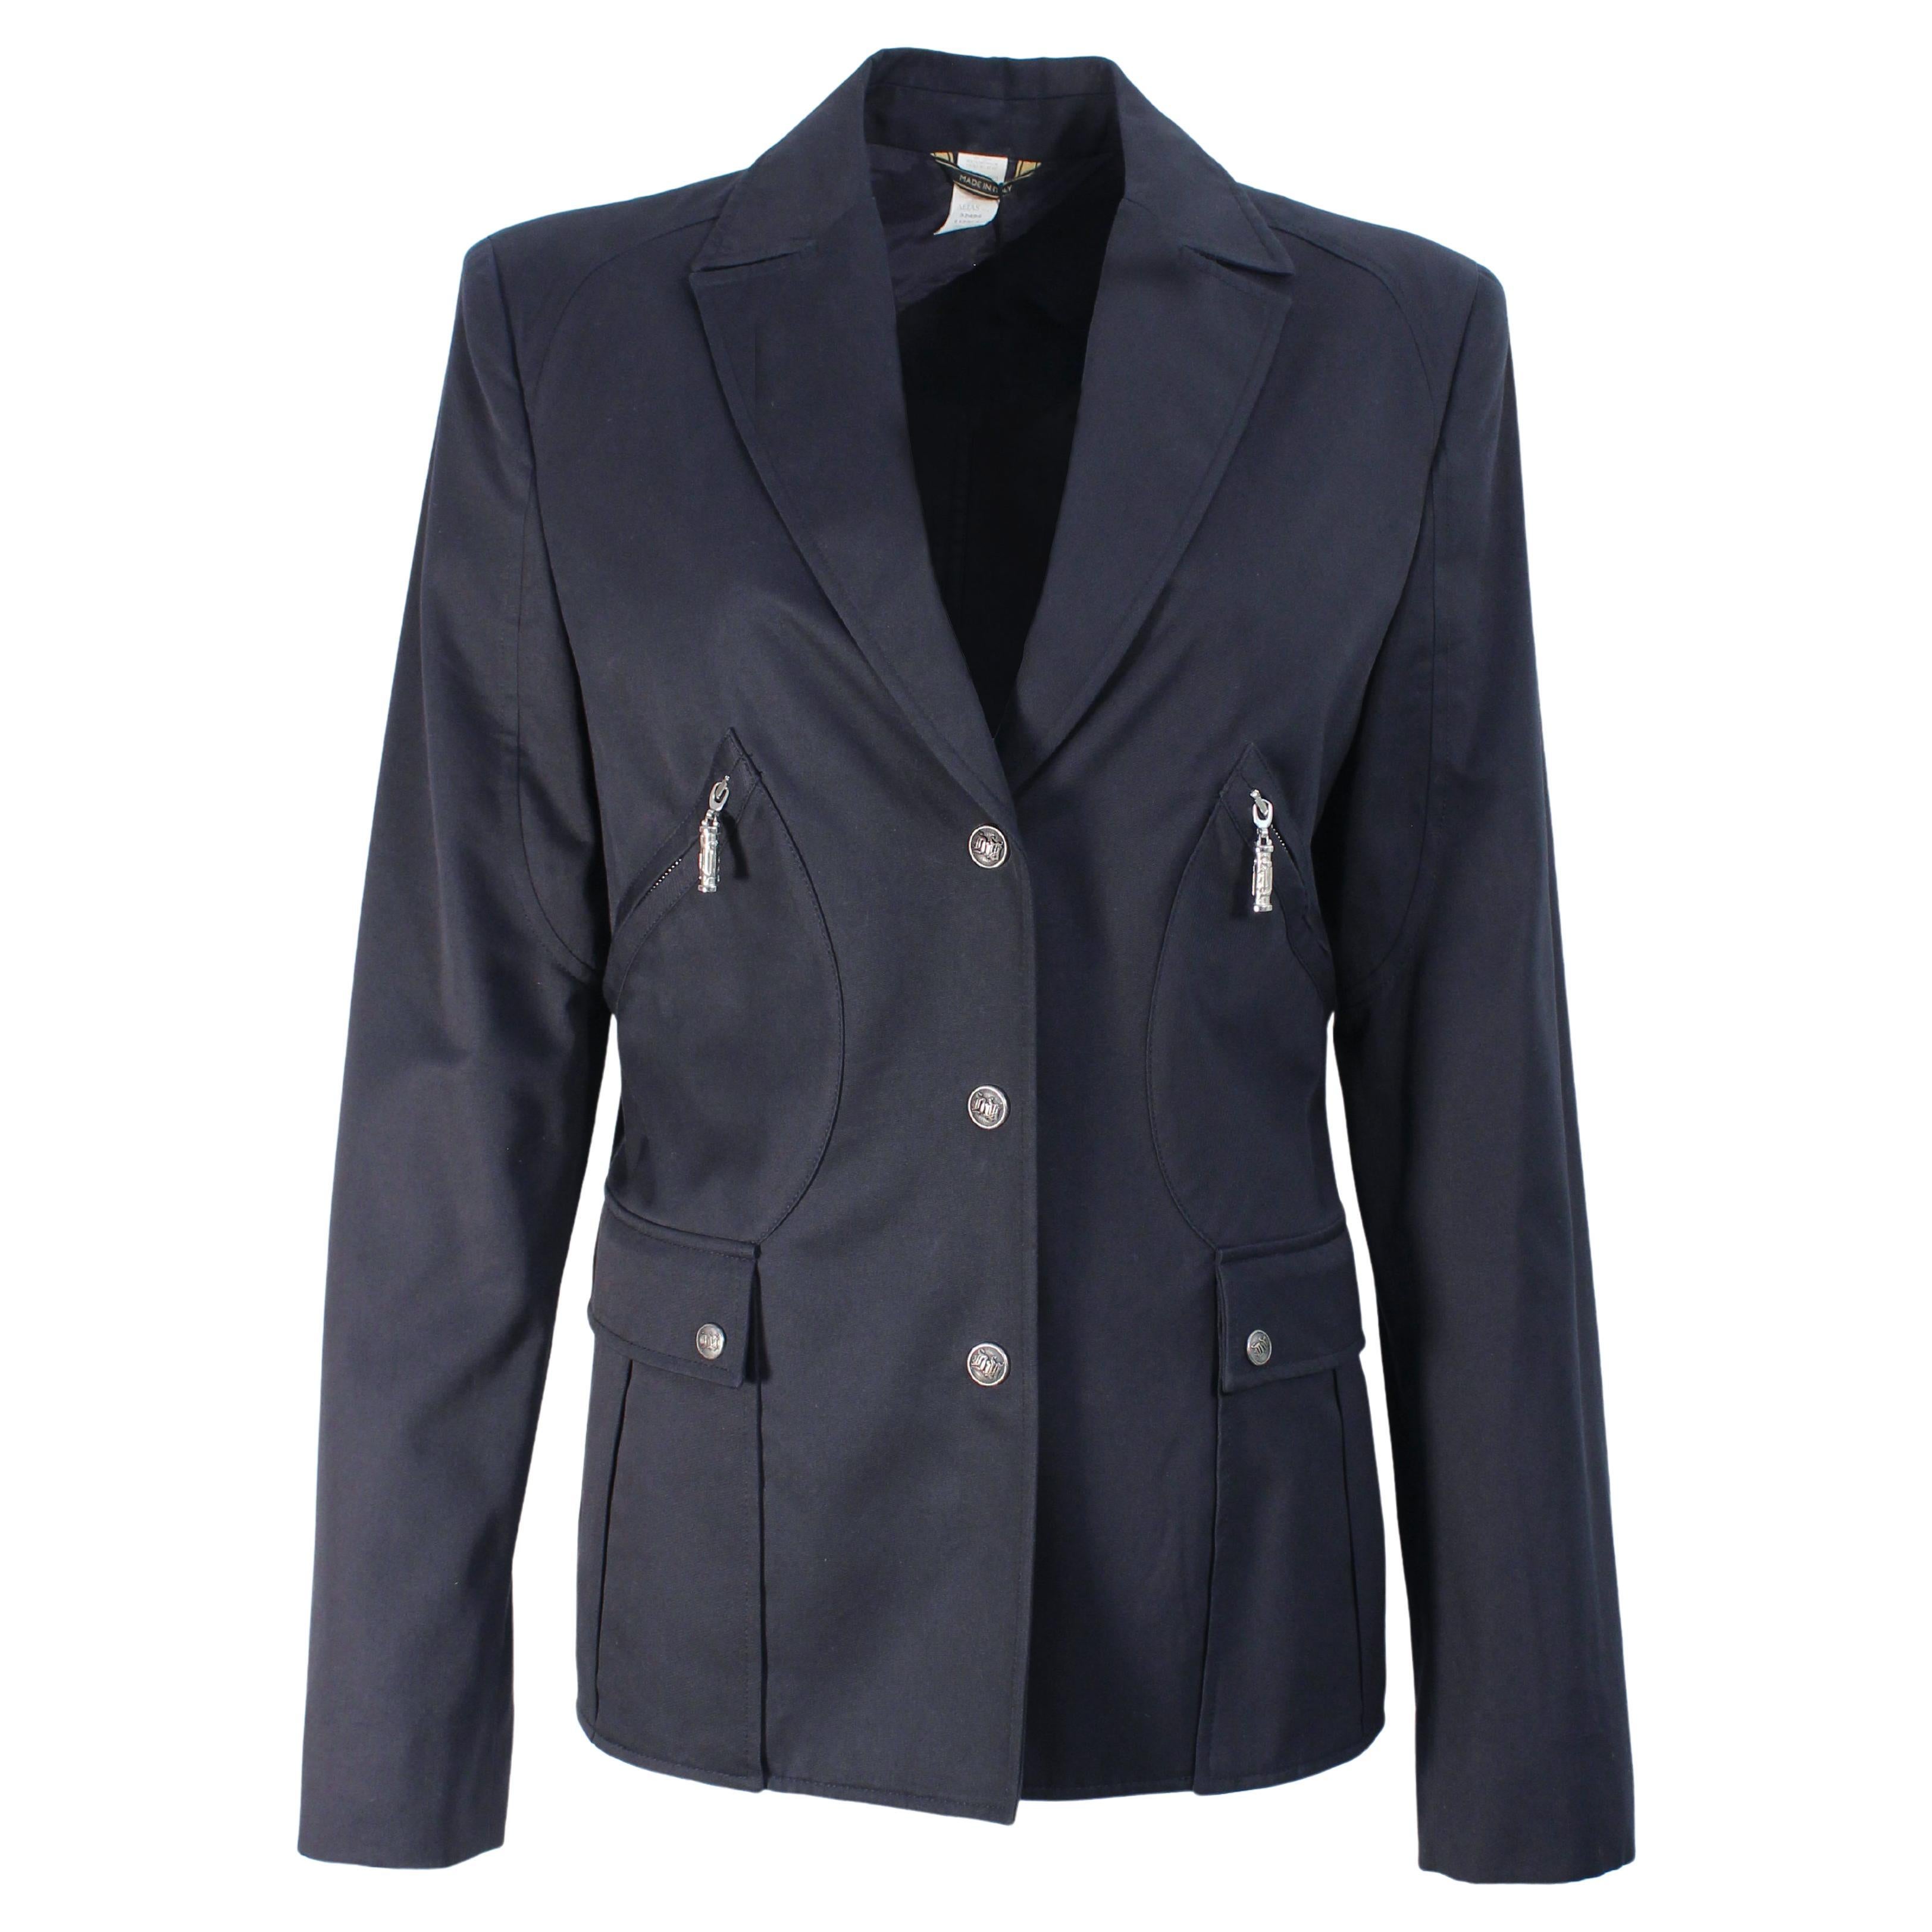 Versace Jacket Blazer Military Style Navy NWT NOS Size 46 